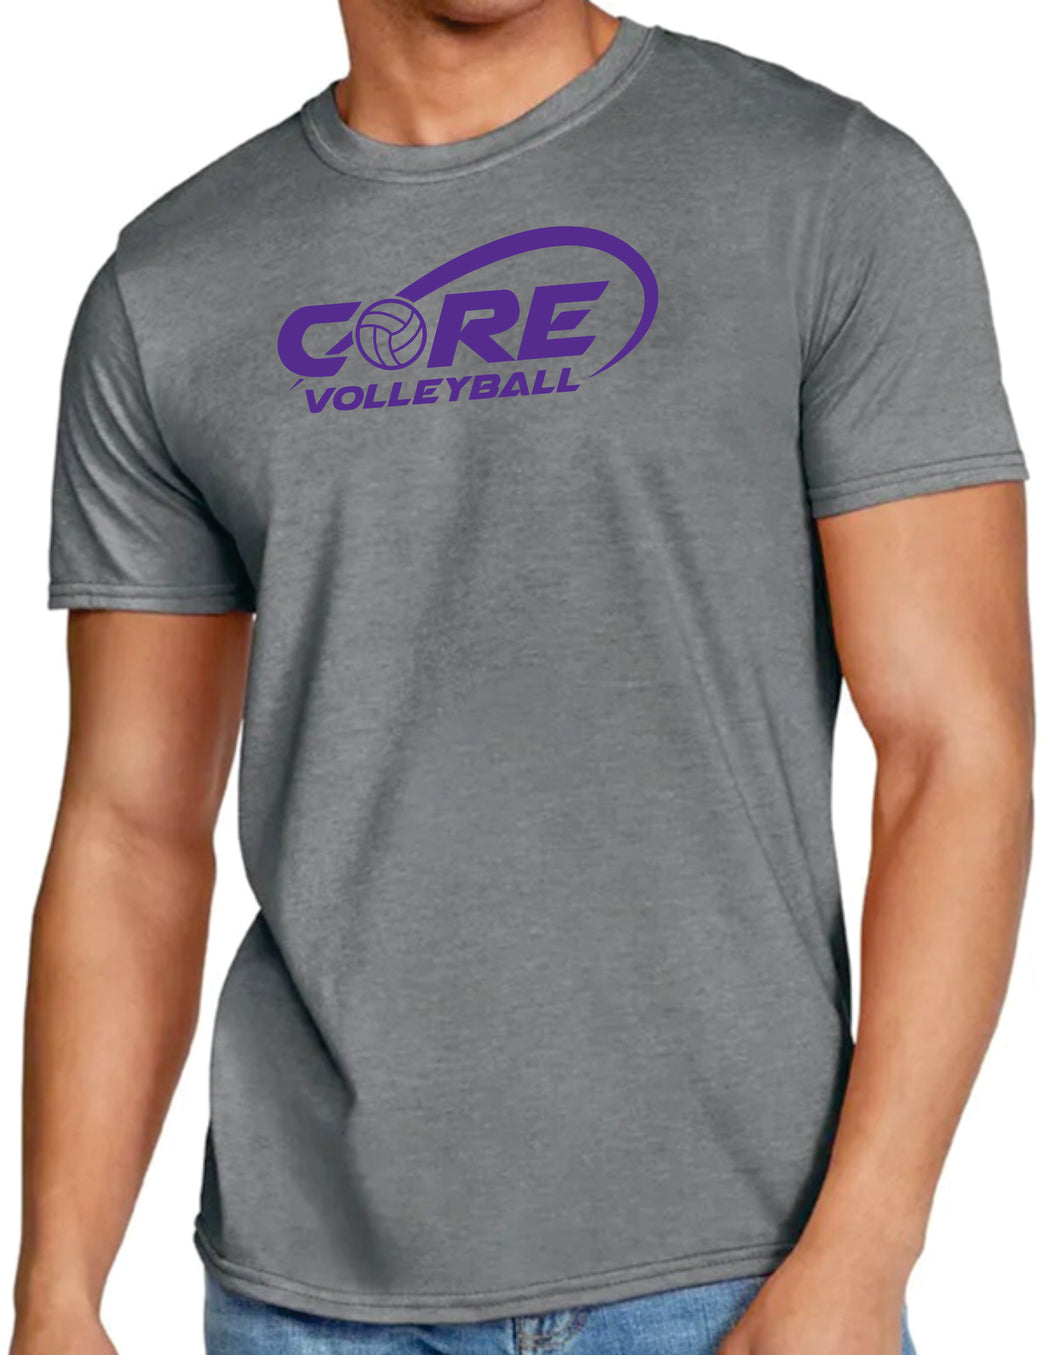 Core Volleyball T-Shirt